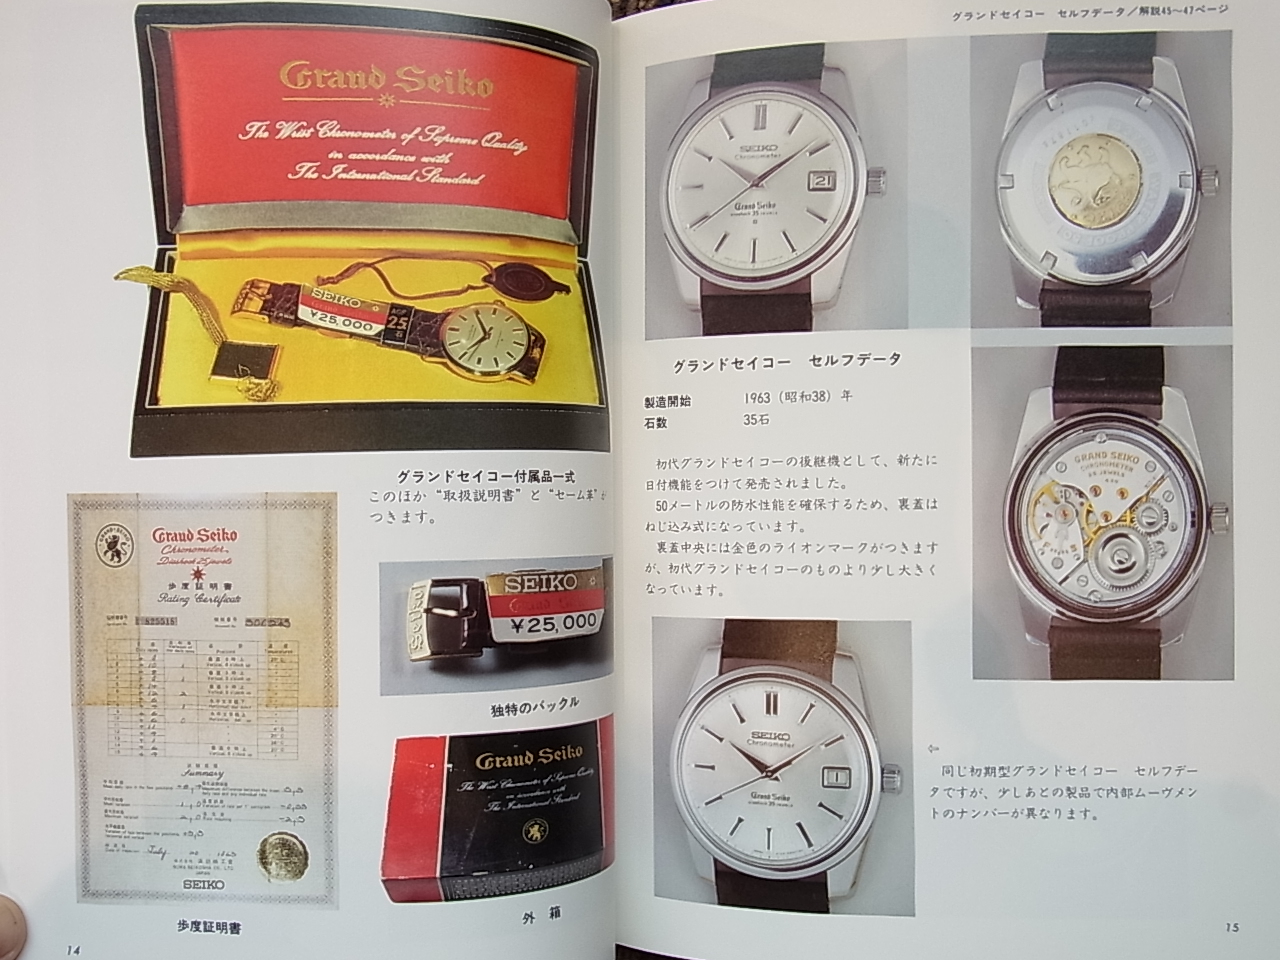 TB1] トンボ出版 国産腕時計①”セイコークラウン”N.O.S